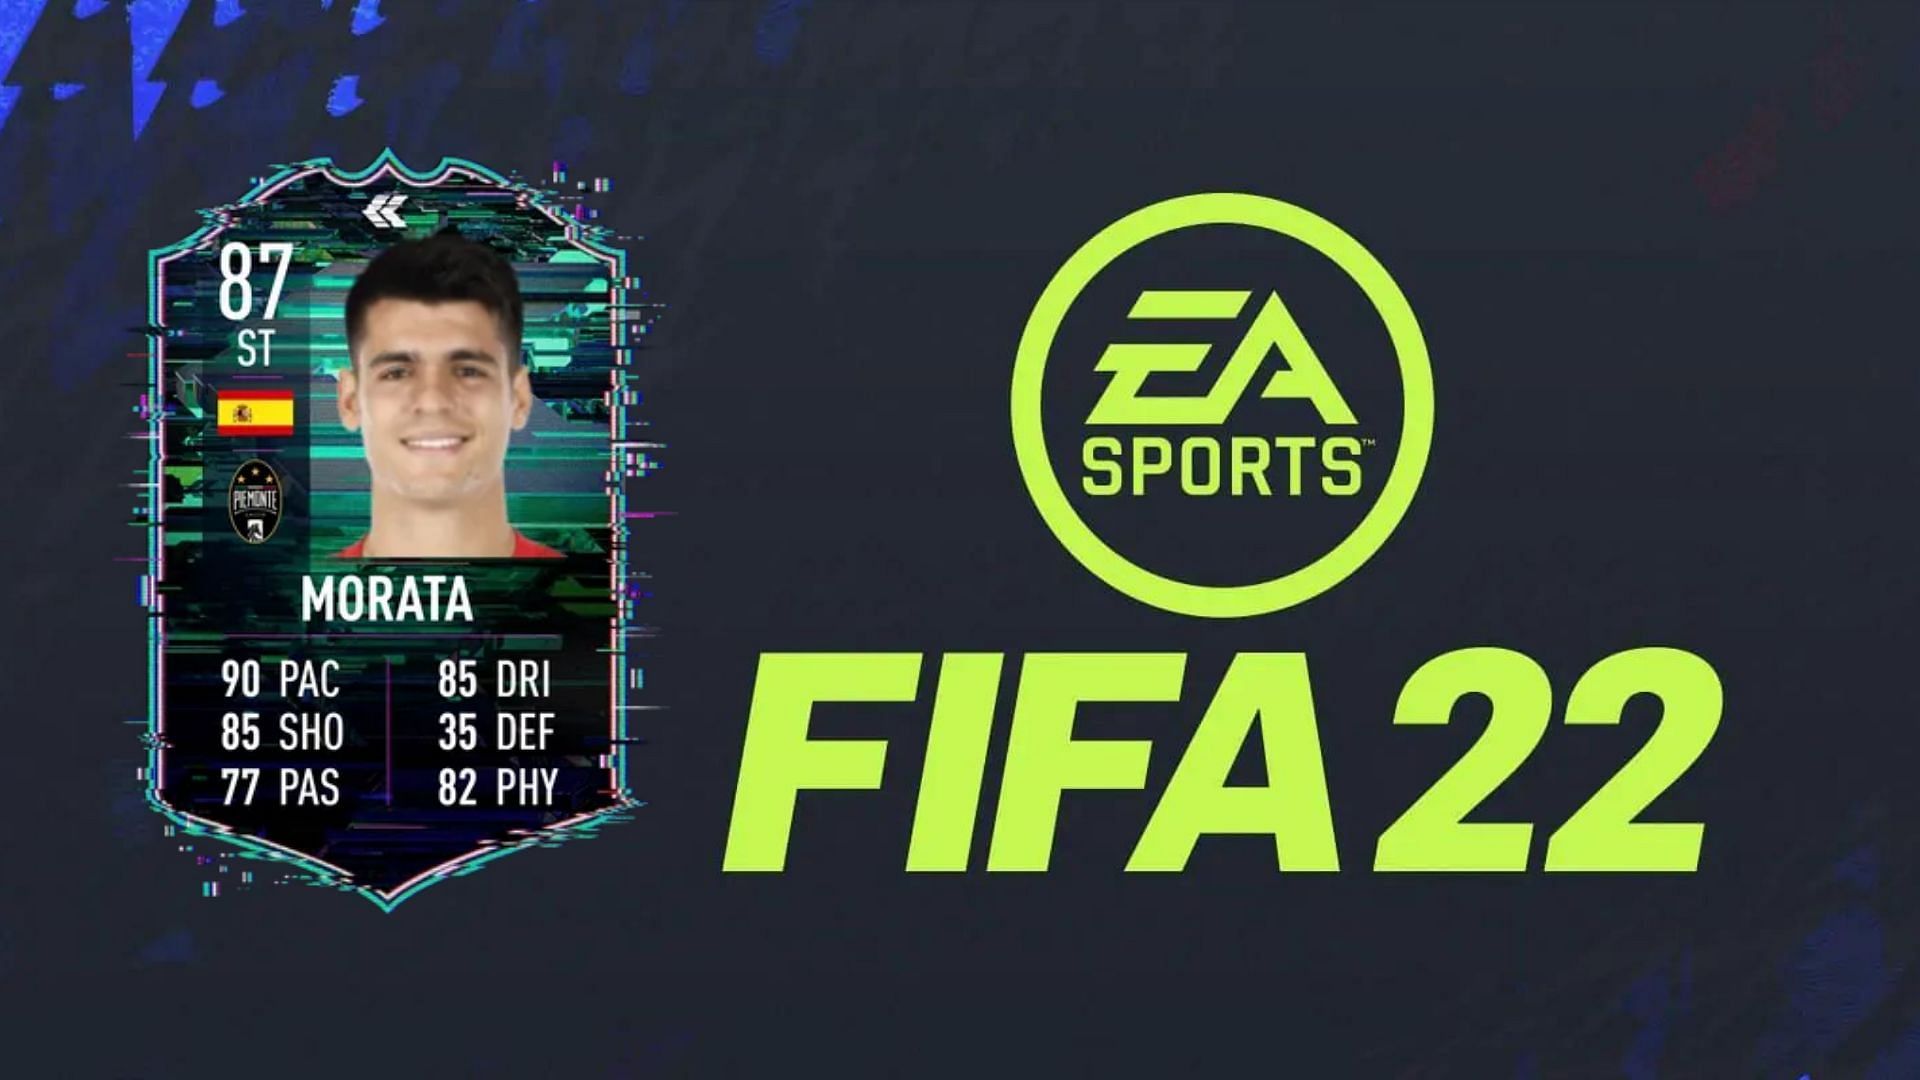 Alvaro Morata SBC is live in FIFA 22 (Image via Sportskeeda)